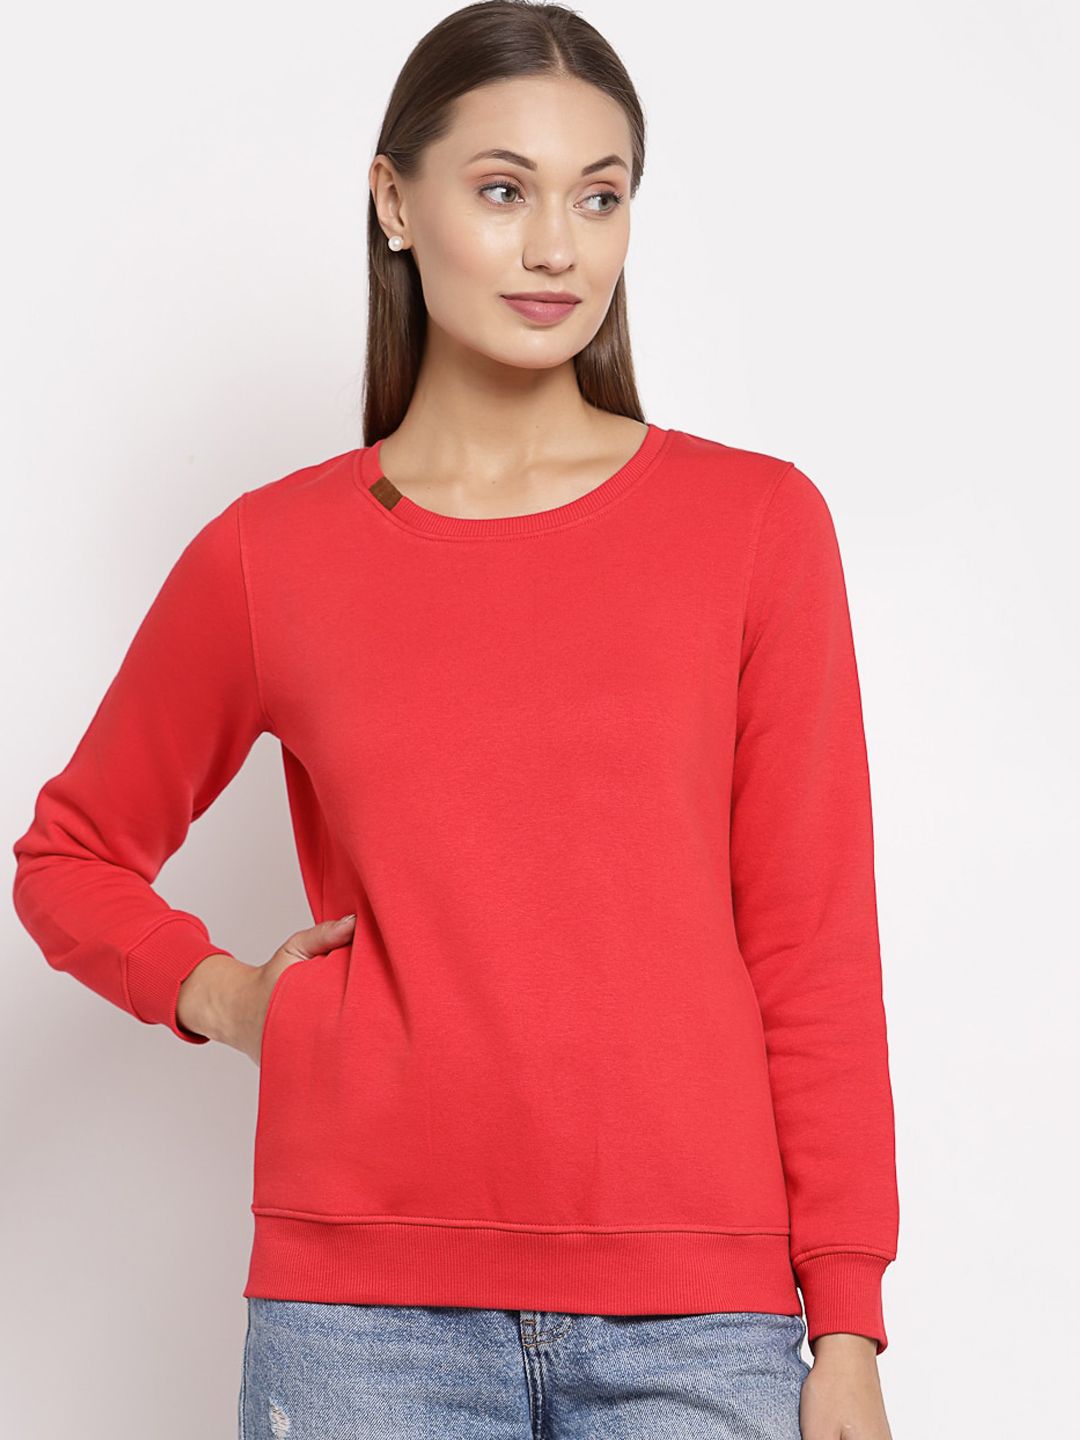 Juelle Women Red Sweatshirt Price in India